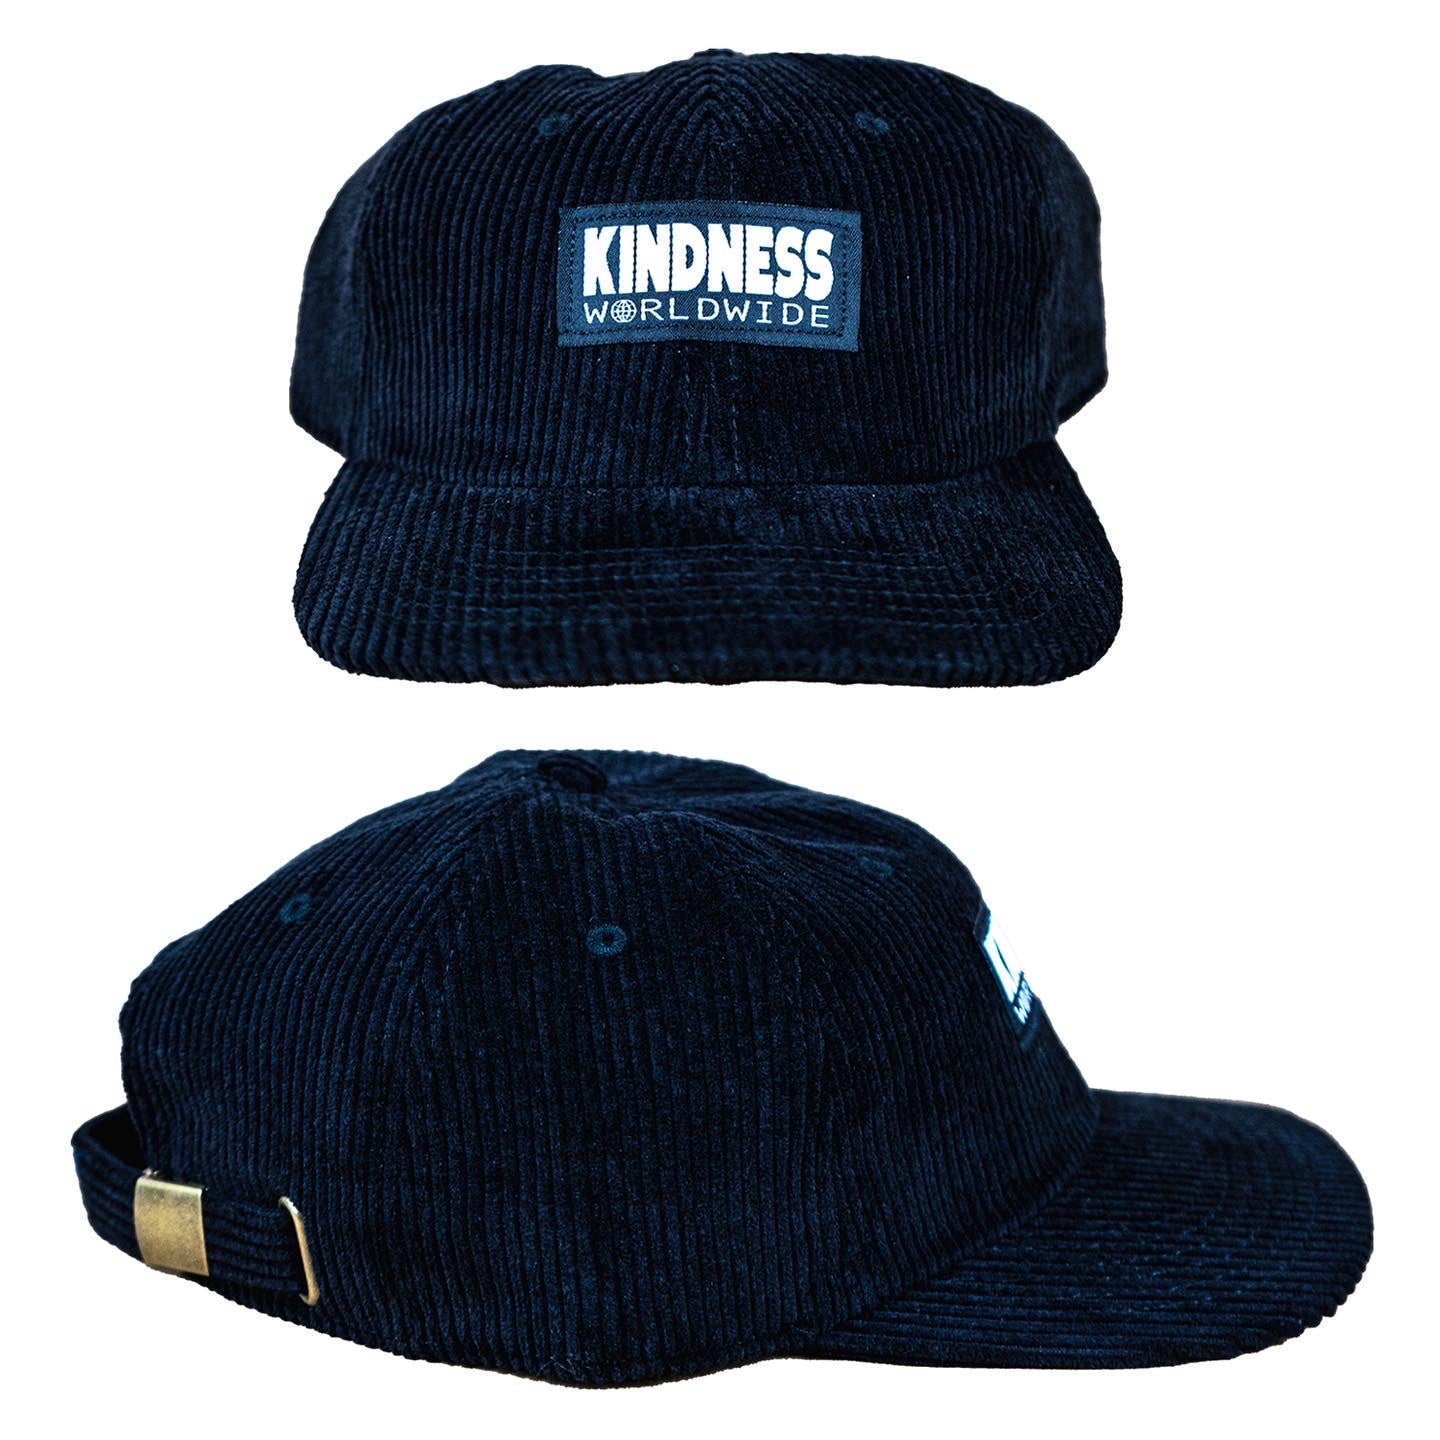 The Kindness Worldwide Corduroy Hat